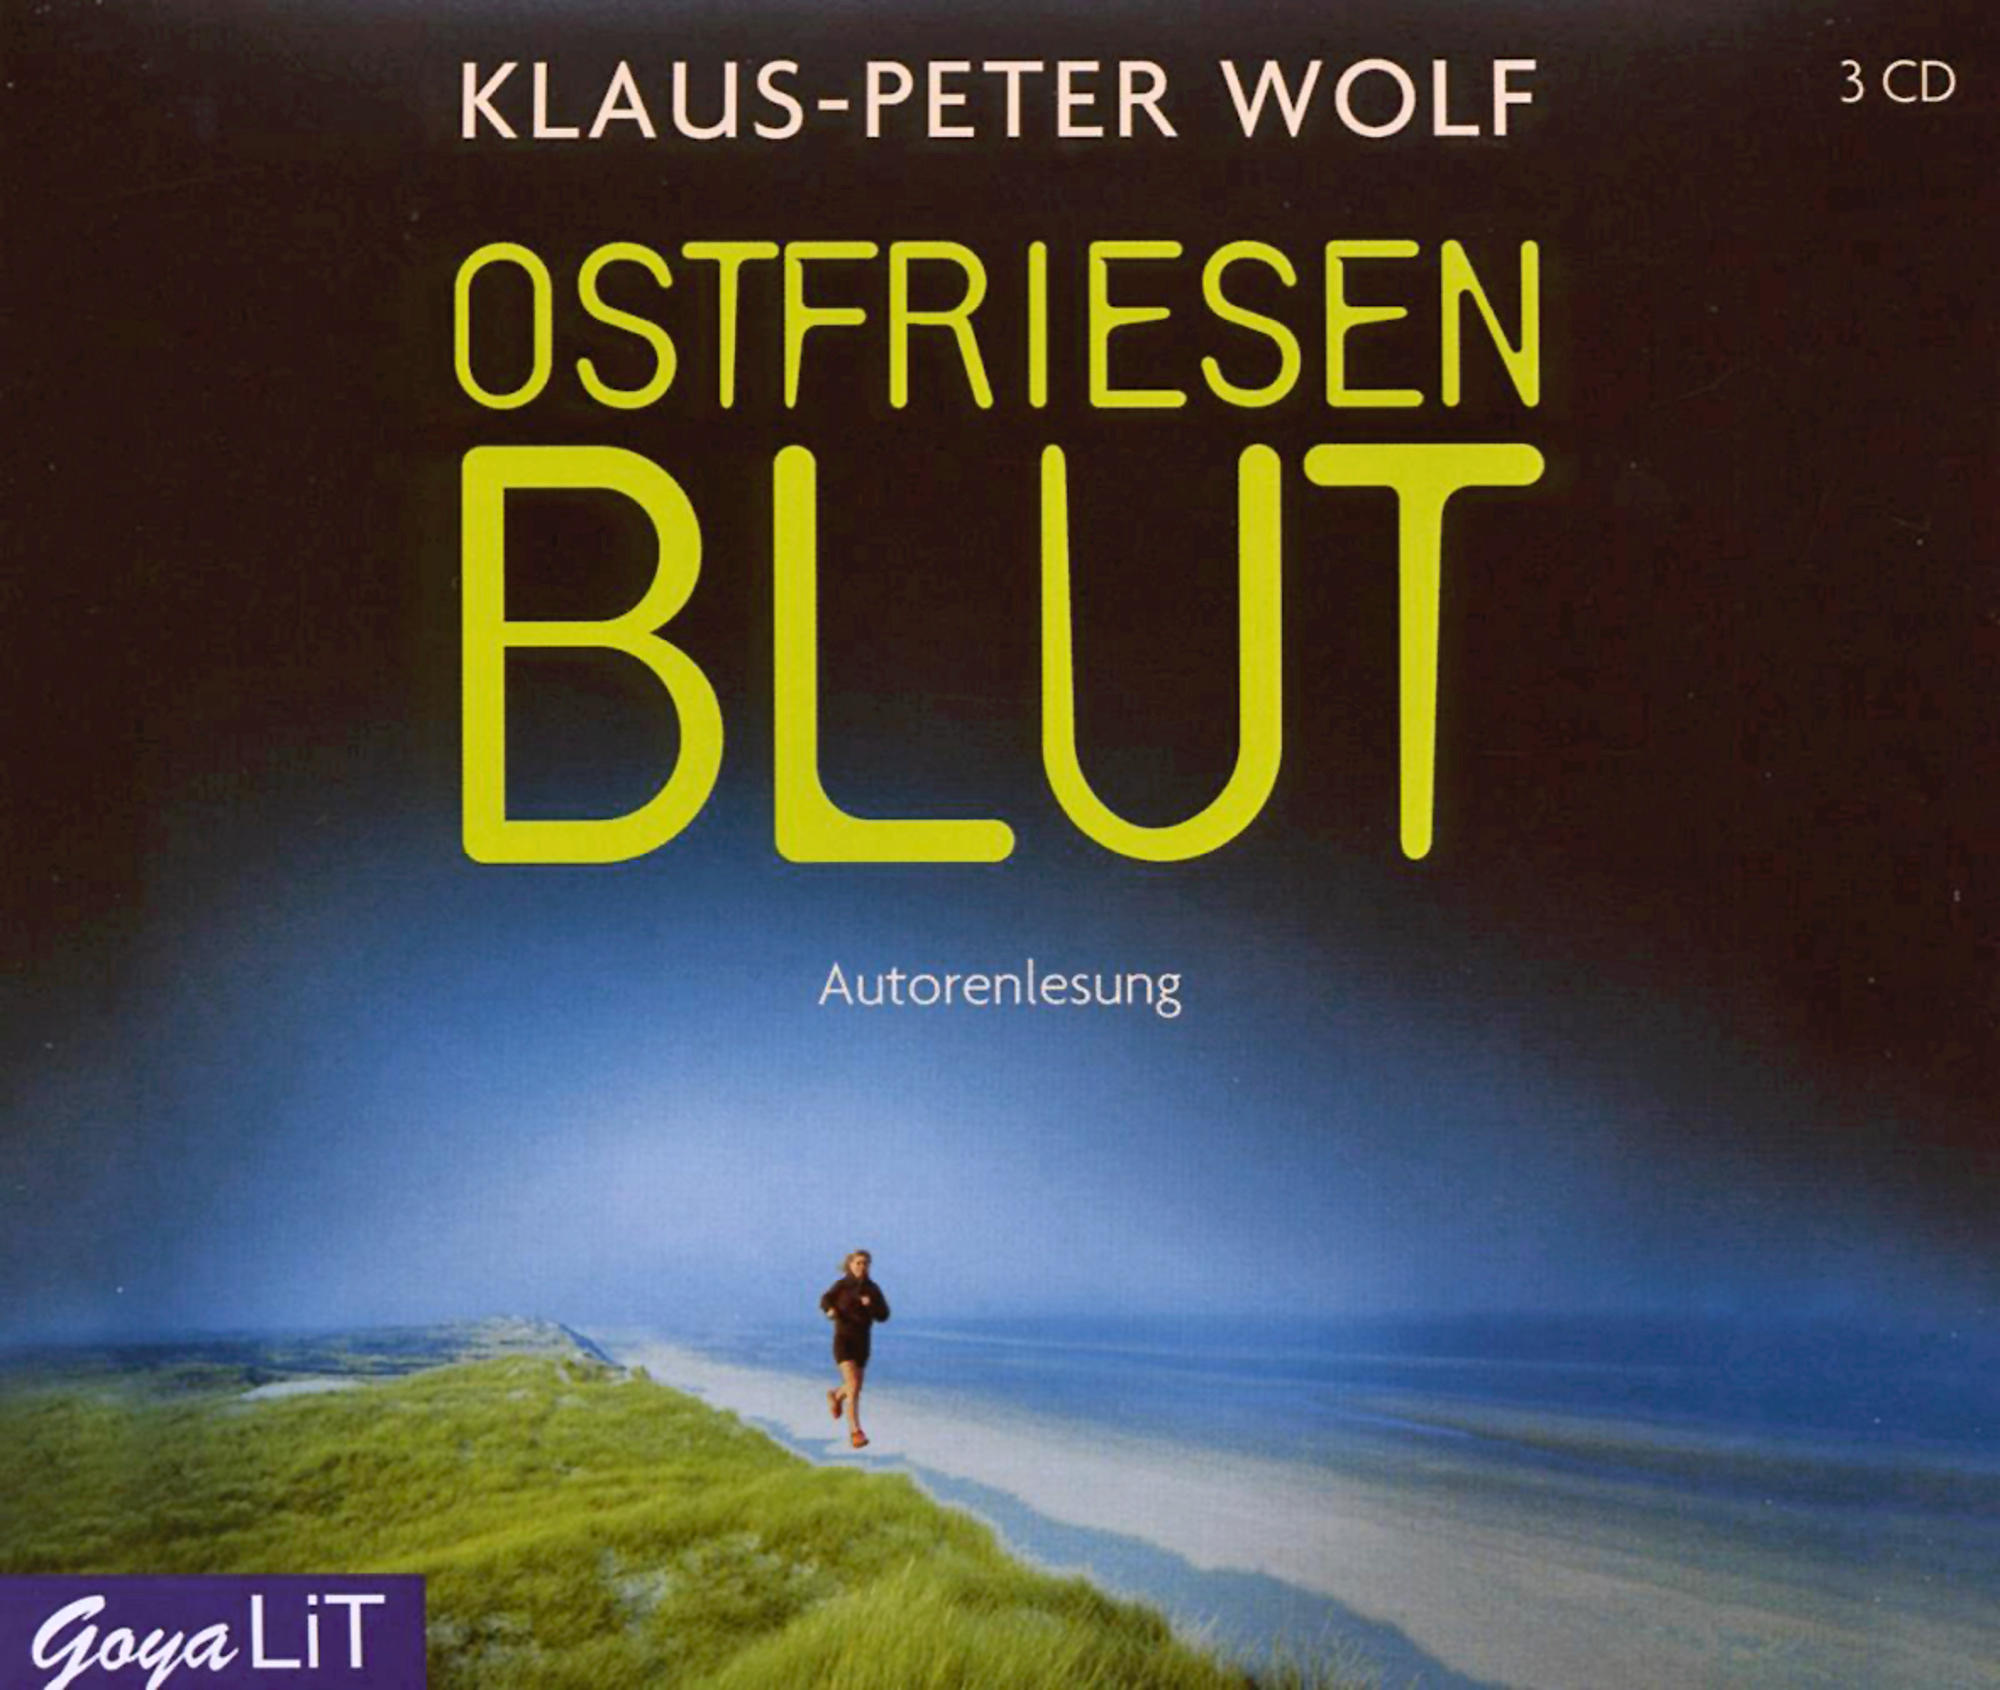 Klaus Wolf - Ostfriesenblut - (CD)